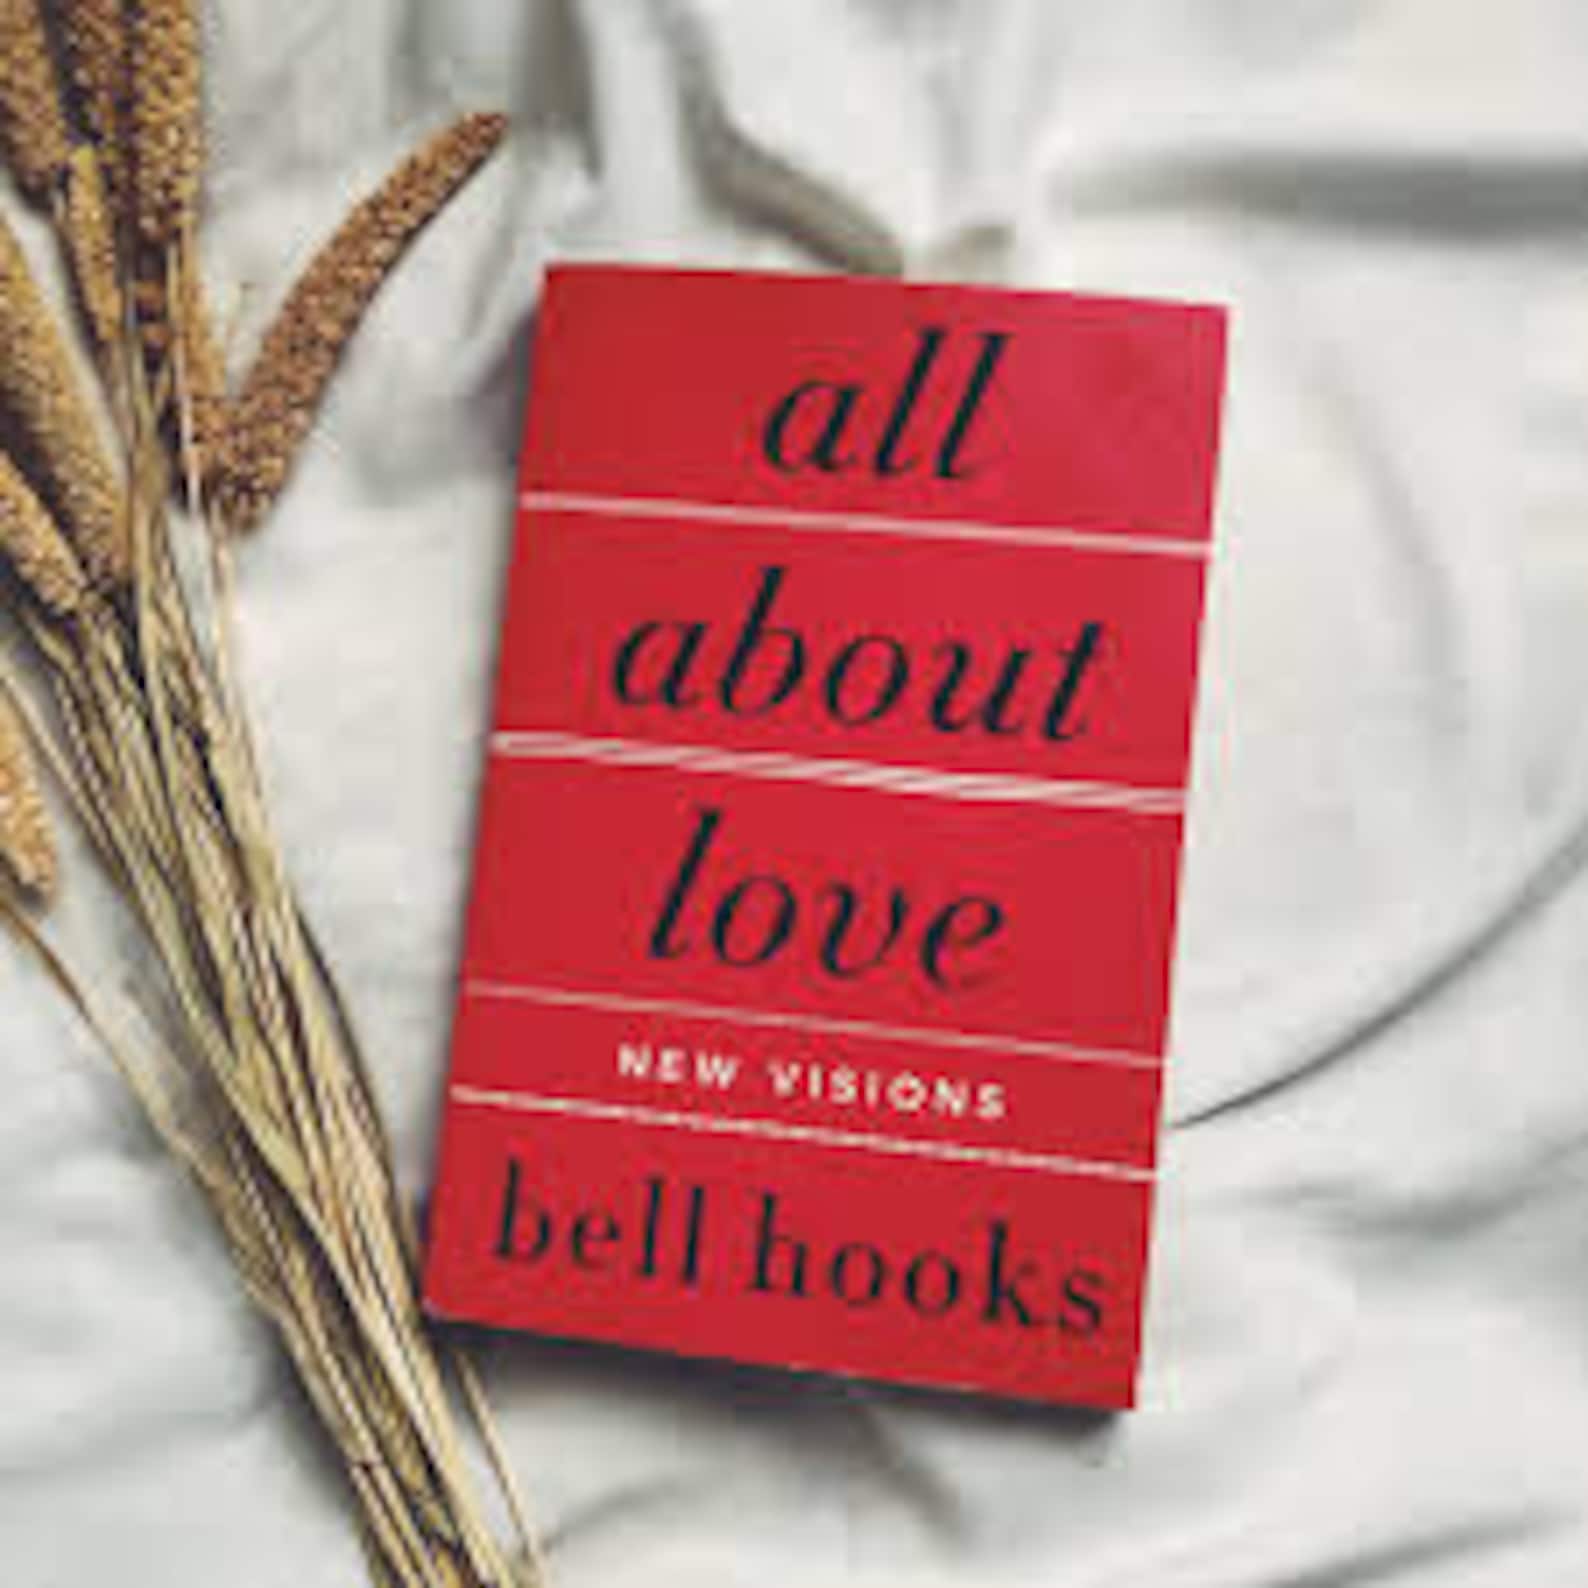 bell hooks essay on love